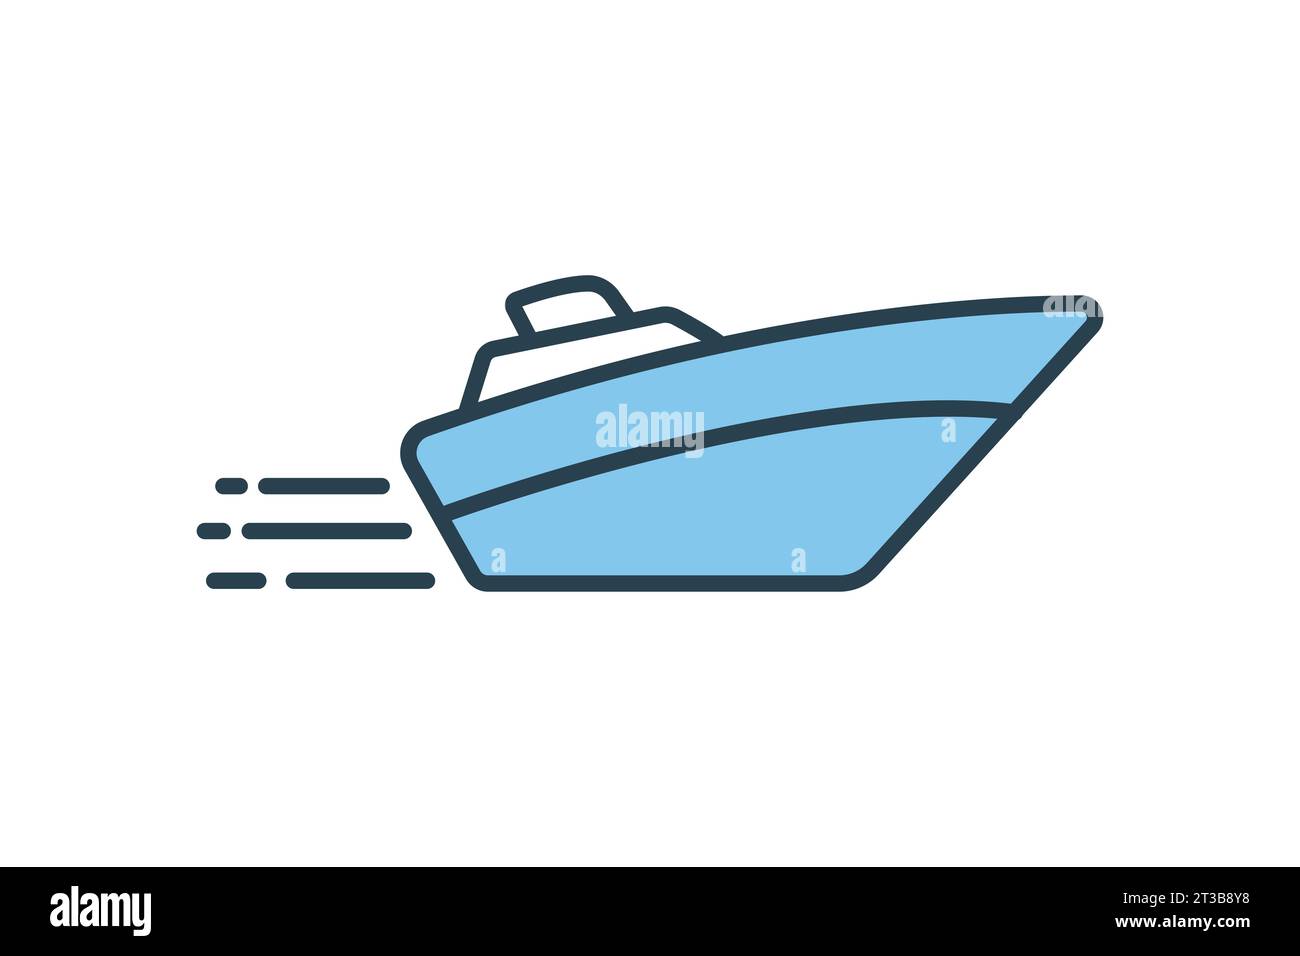 Printable Speedboat Craft Template Transportation Craft 